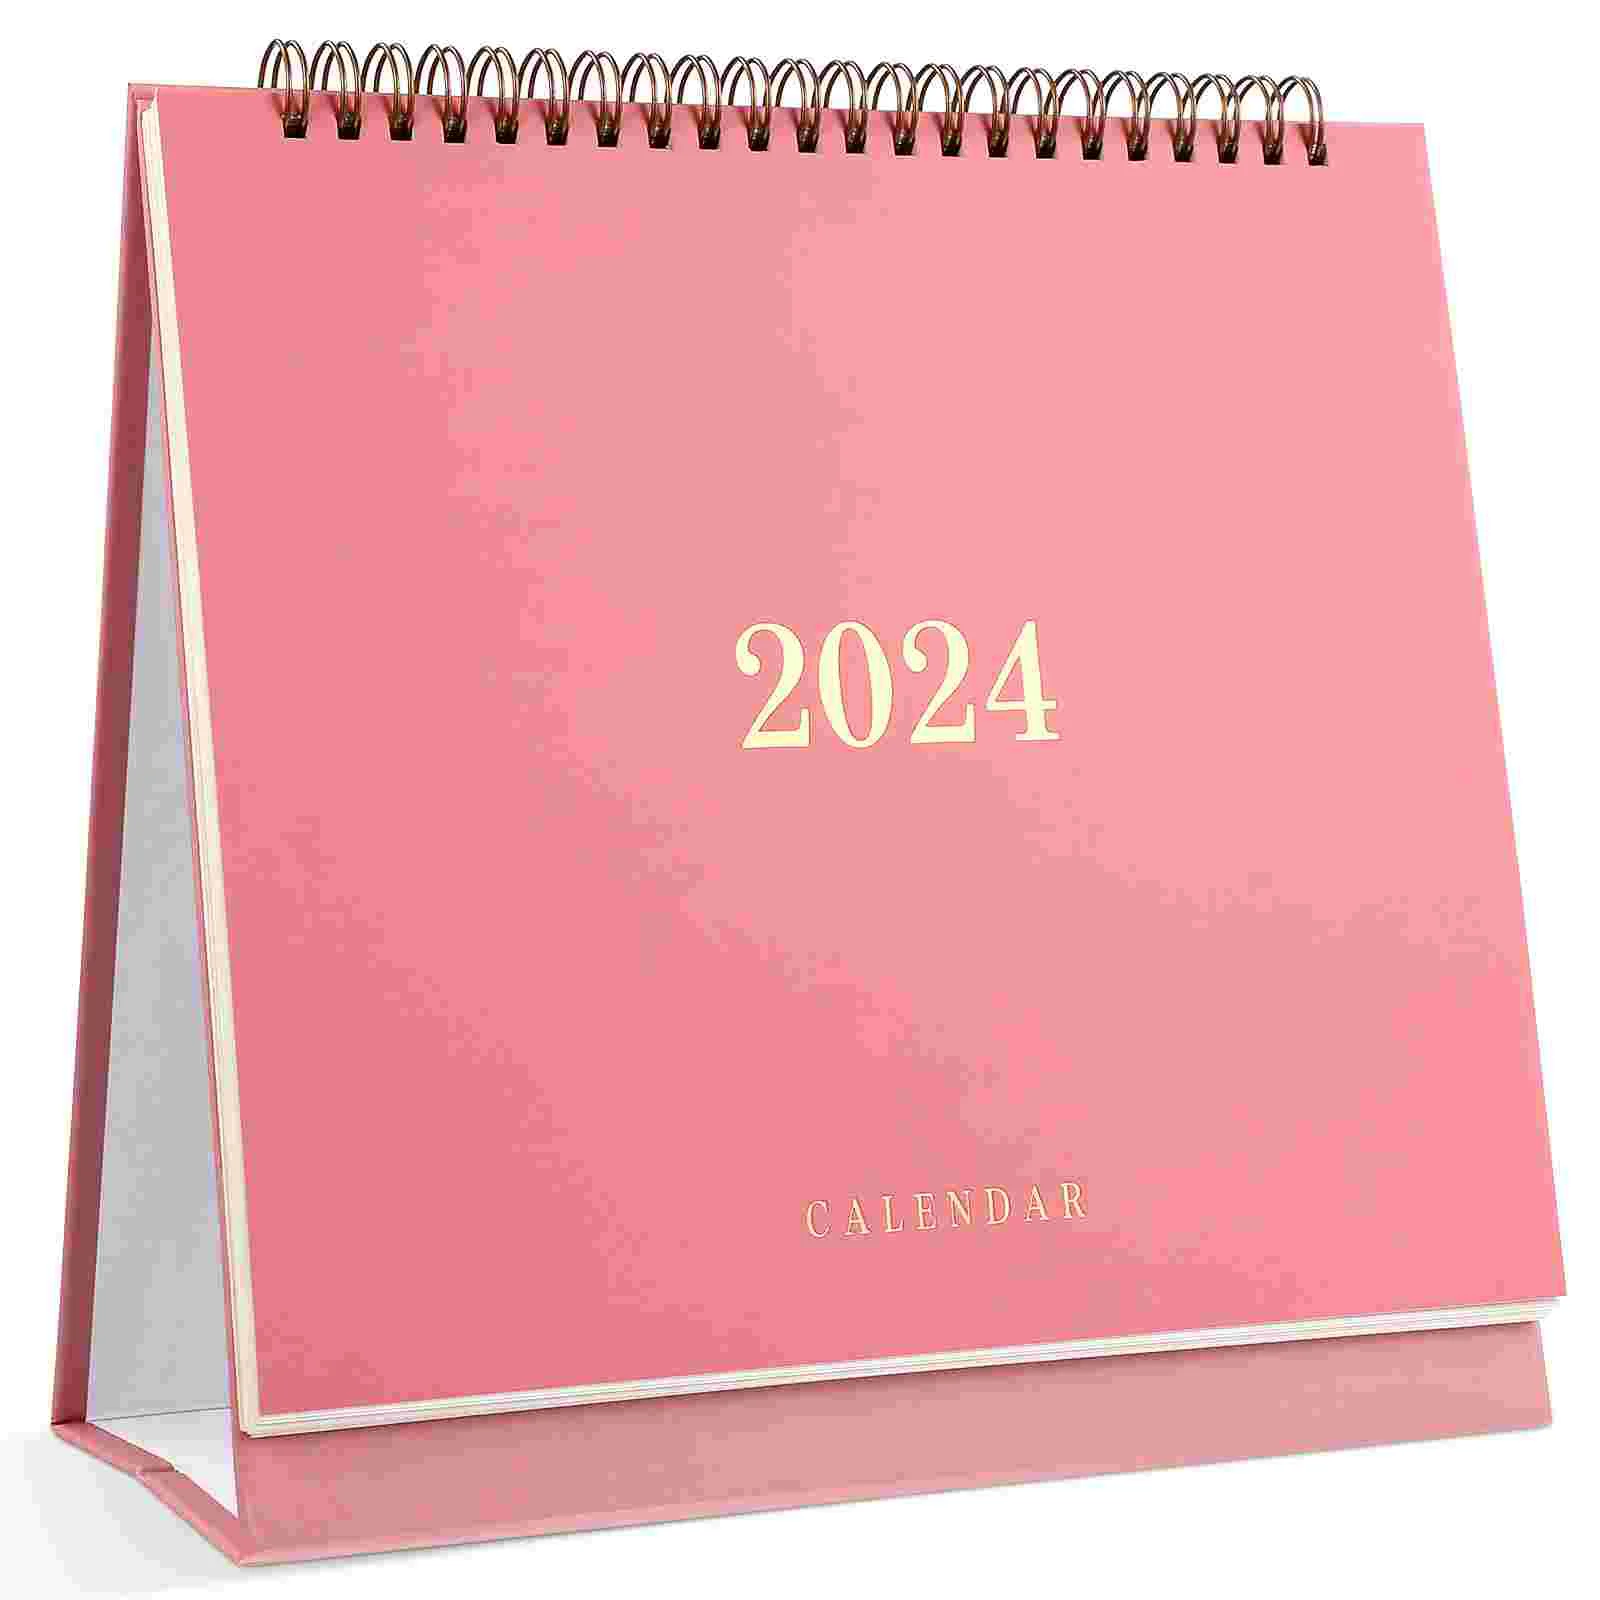 

2024 Calendar Desk Month Planner Calenders - 2025 Monthly Planning Desktop Wall